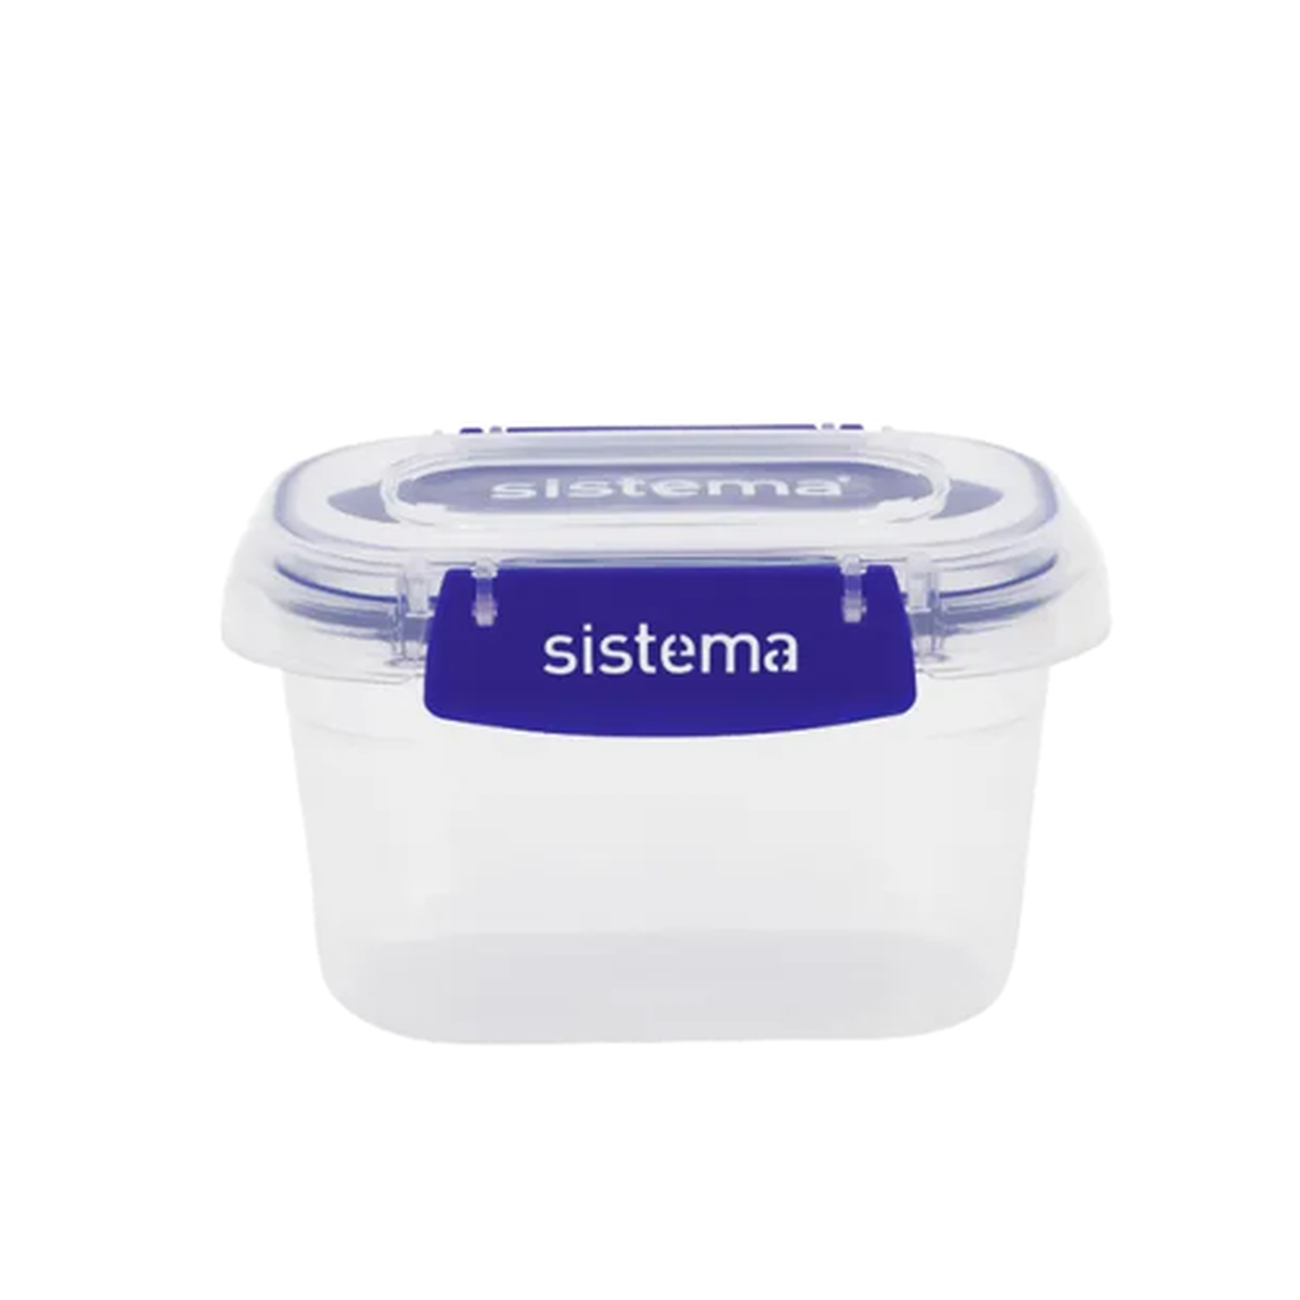 Sistema Yogurt To Go 2-pc. Food Storage Container Set